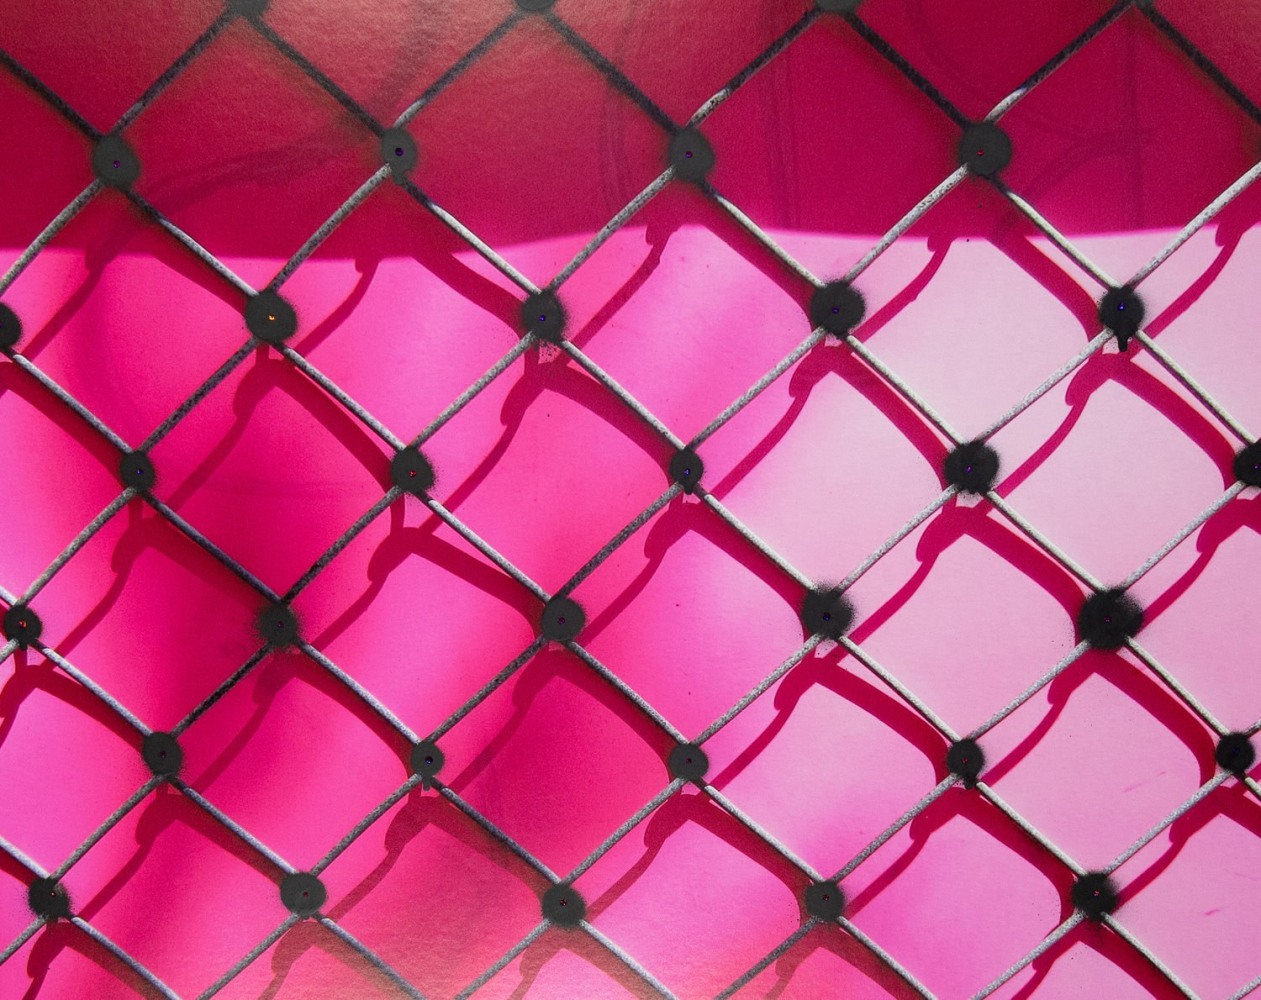 Sadie Barnette
Untitled (Pink fence, black), 2018
Archival pigment print, aerosol paint, Swarovski crystals&amp;nbsp;
37.75 x 45 inches